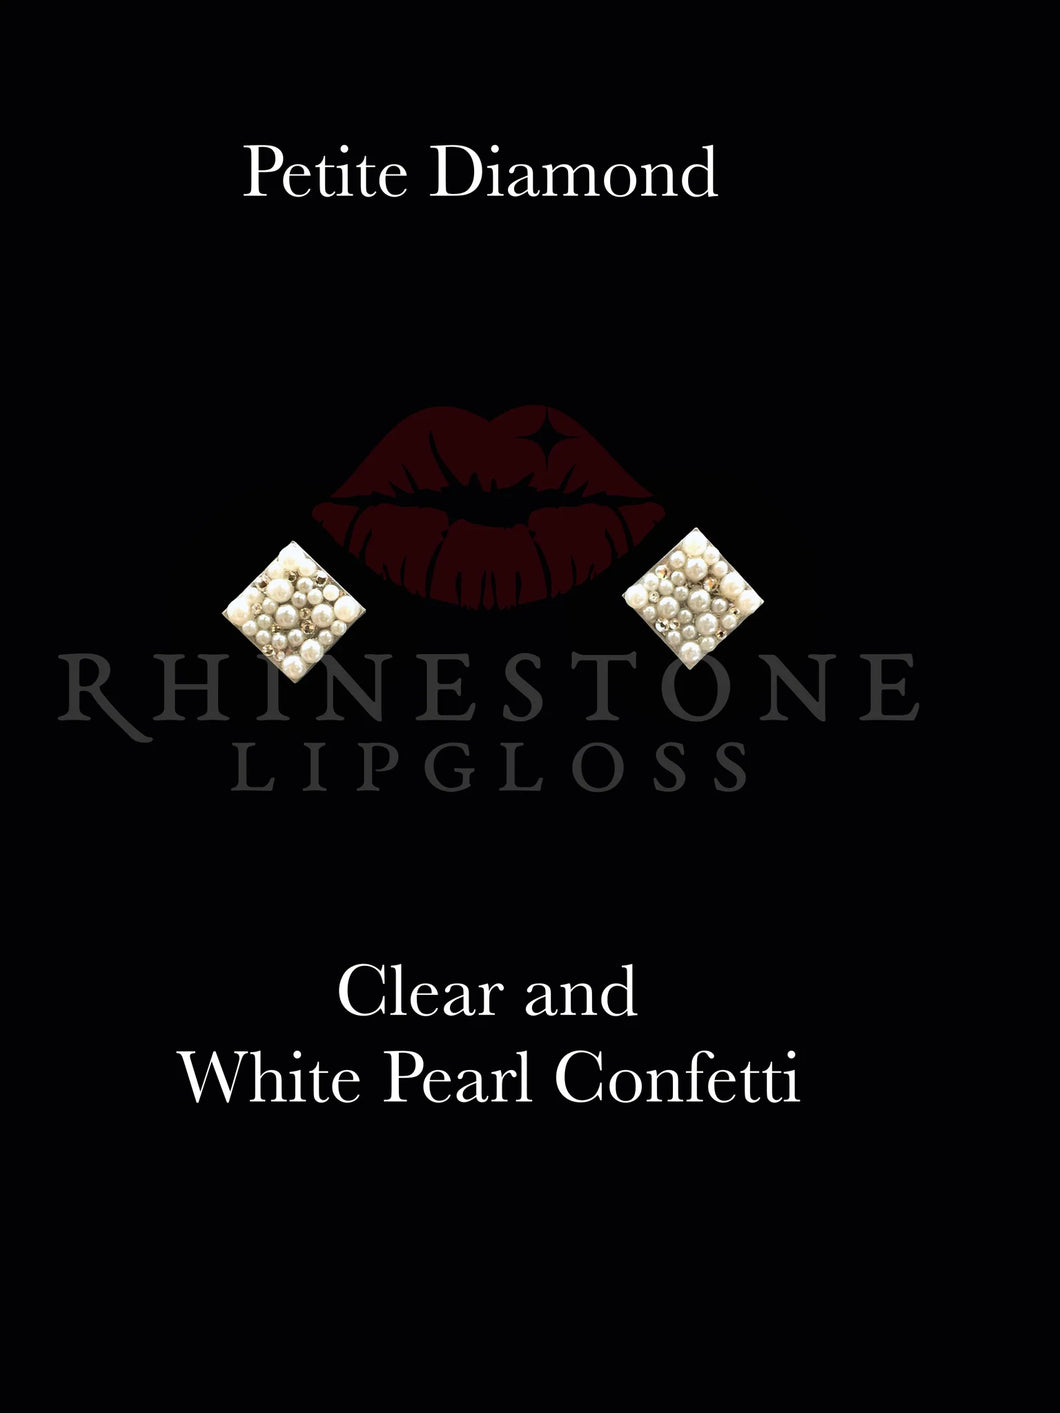 Diamond Petite Confetti White Pearl and Crystal